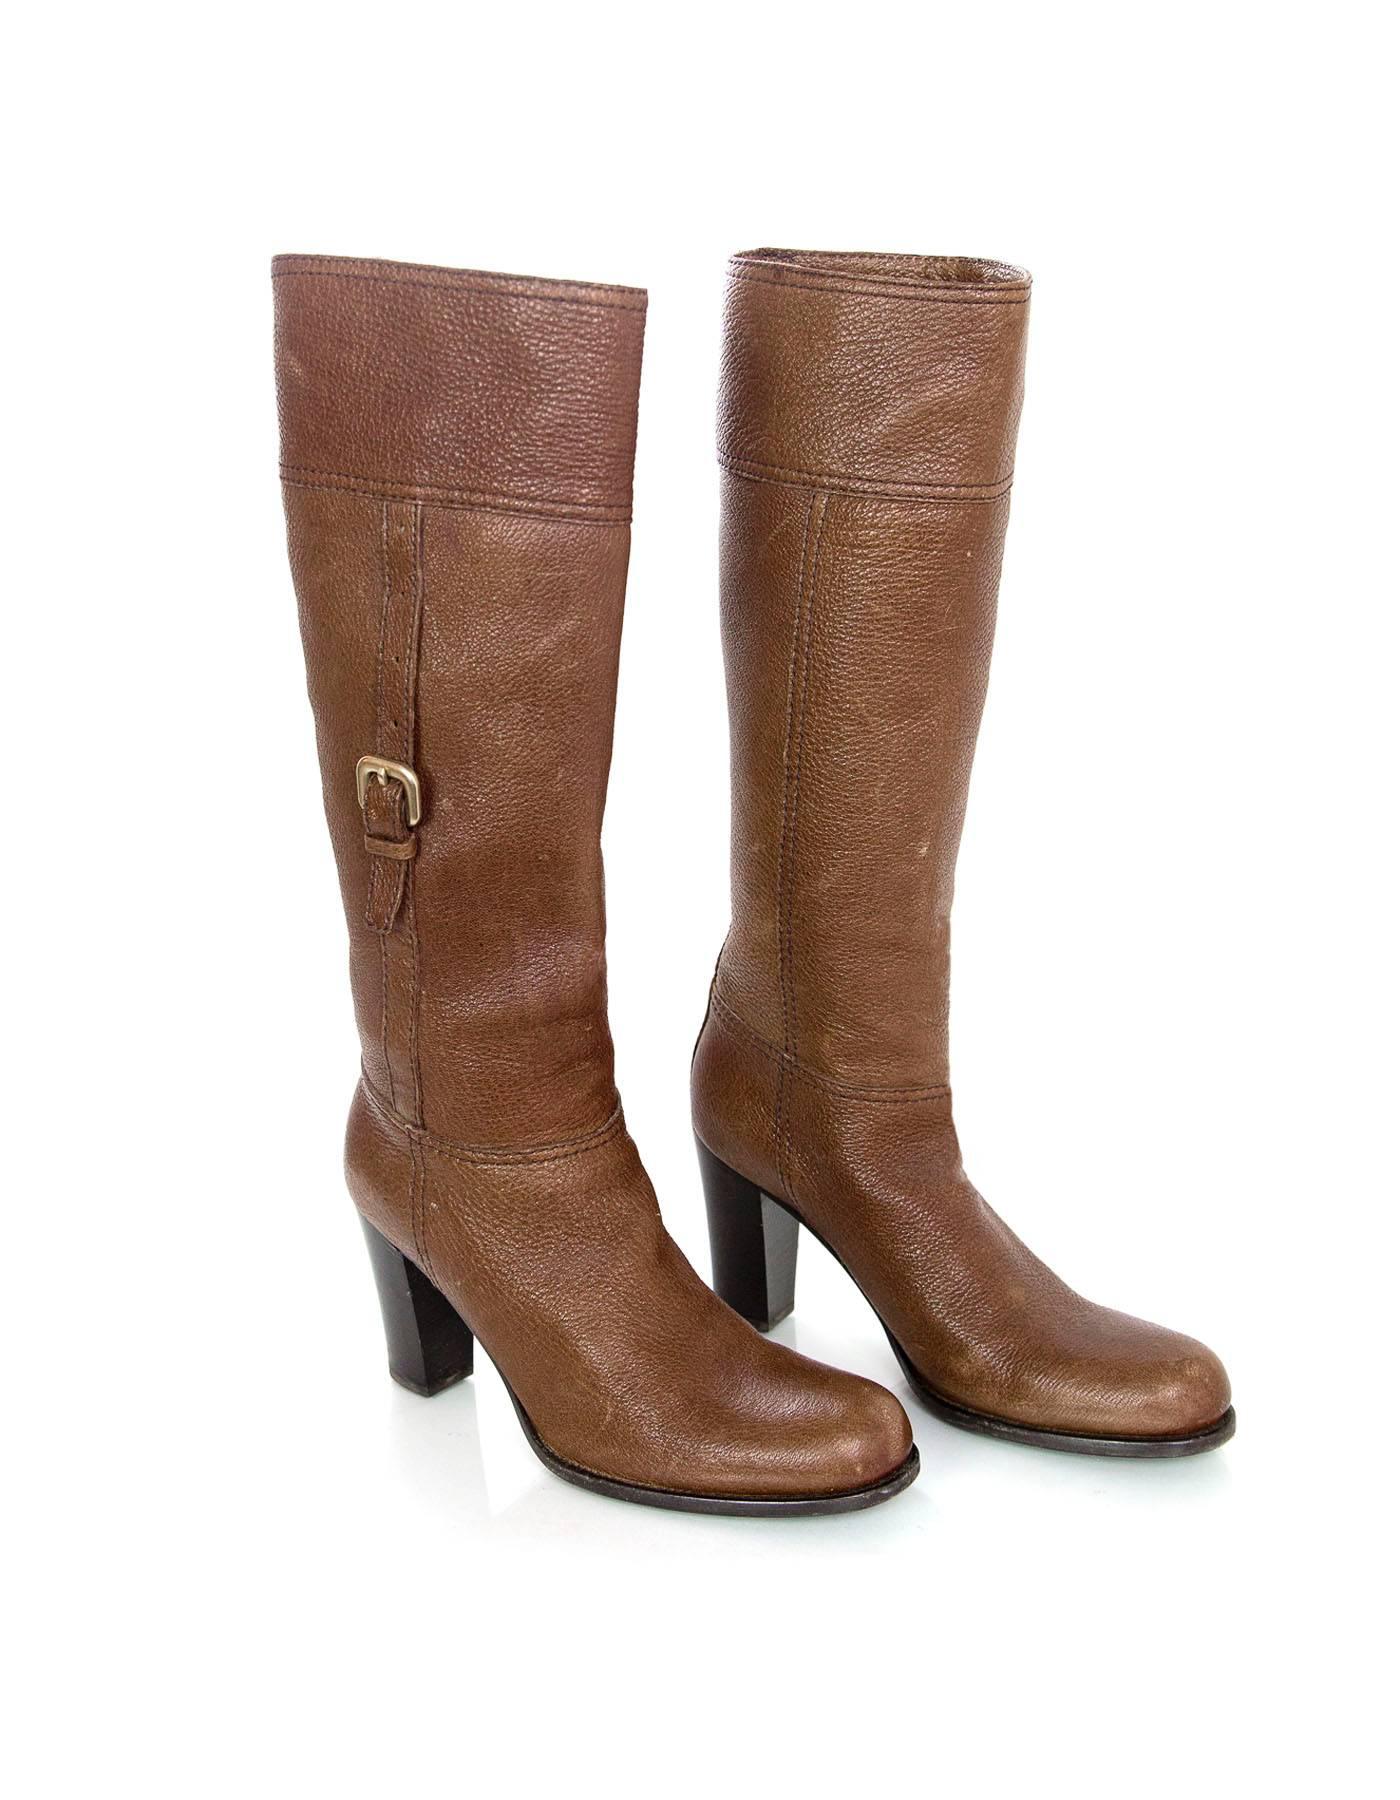 Women's Prada Brown Leather Heeled Boots sz 36.5